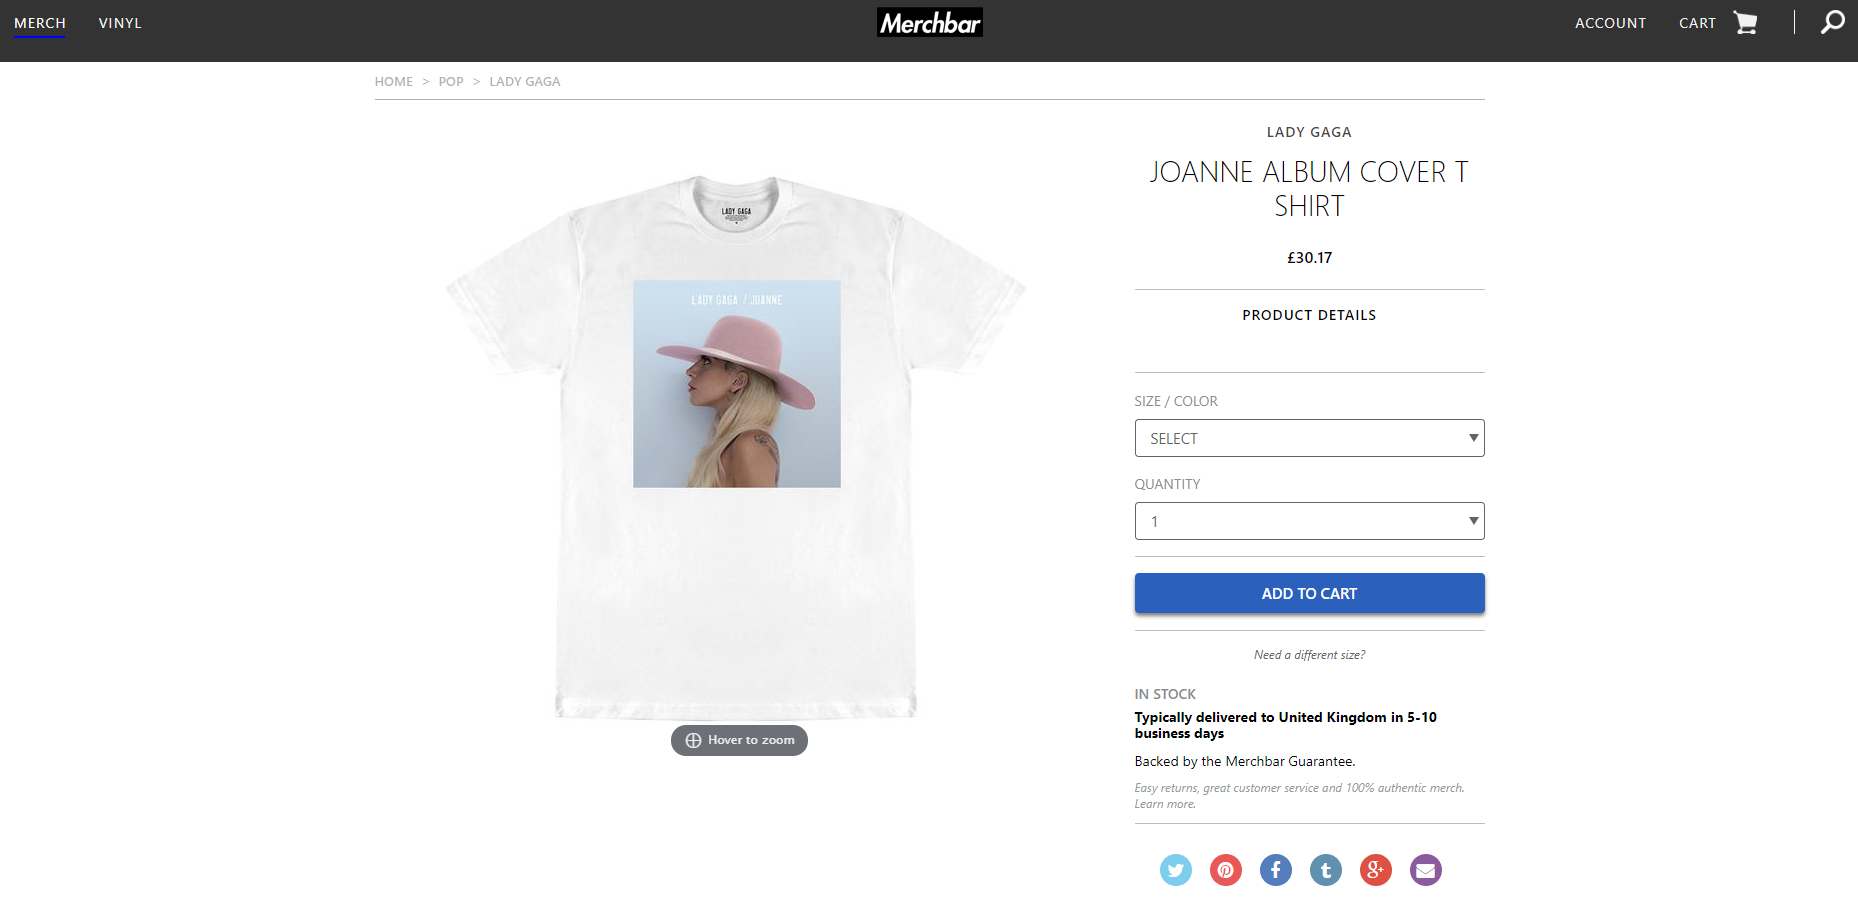 A screenshot showing a Lady Gaga merch product on the Merchbar site.